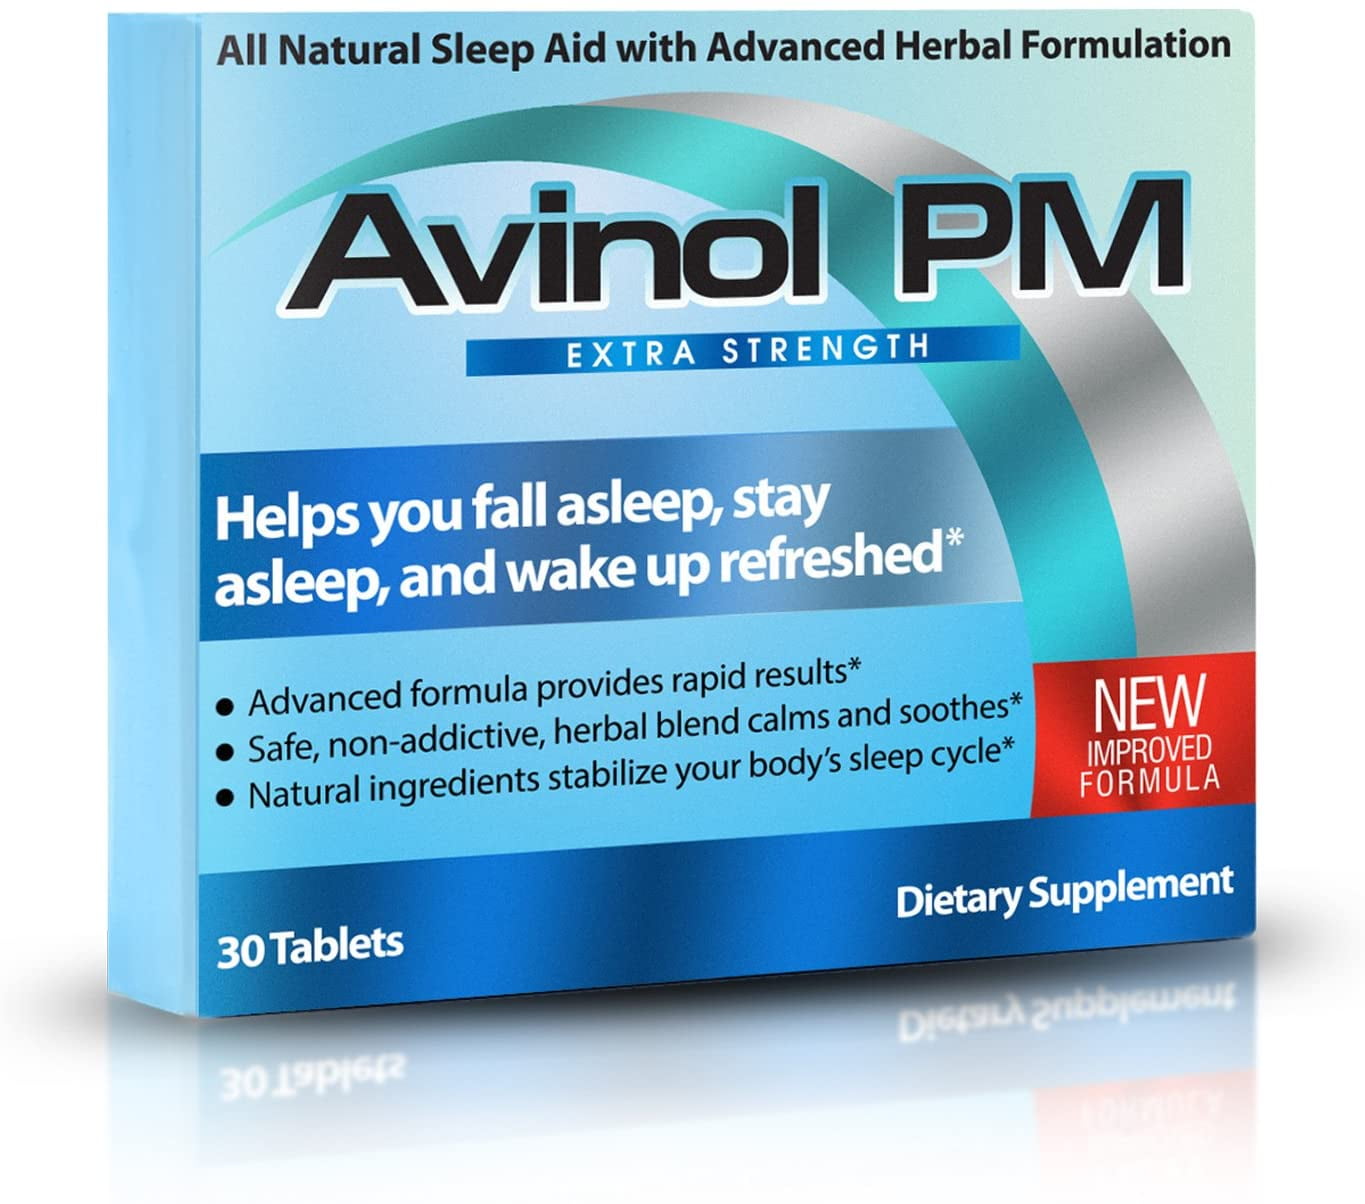 Avinol PM Extra Strength AllinOne Natural Sleep Aid for Deep Restful